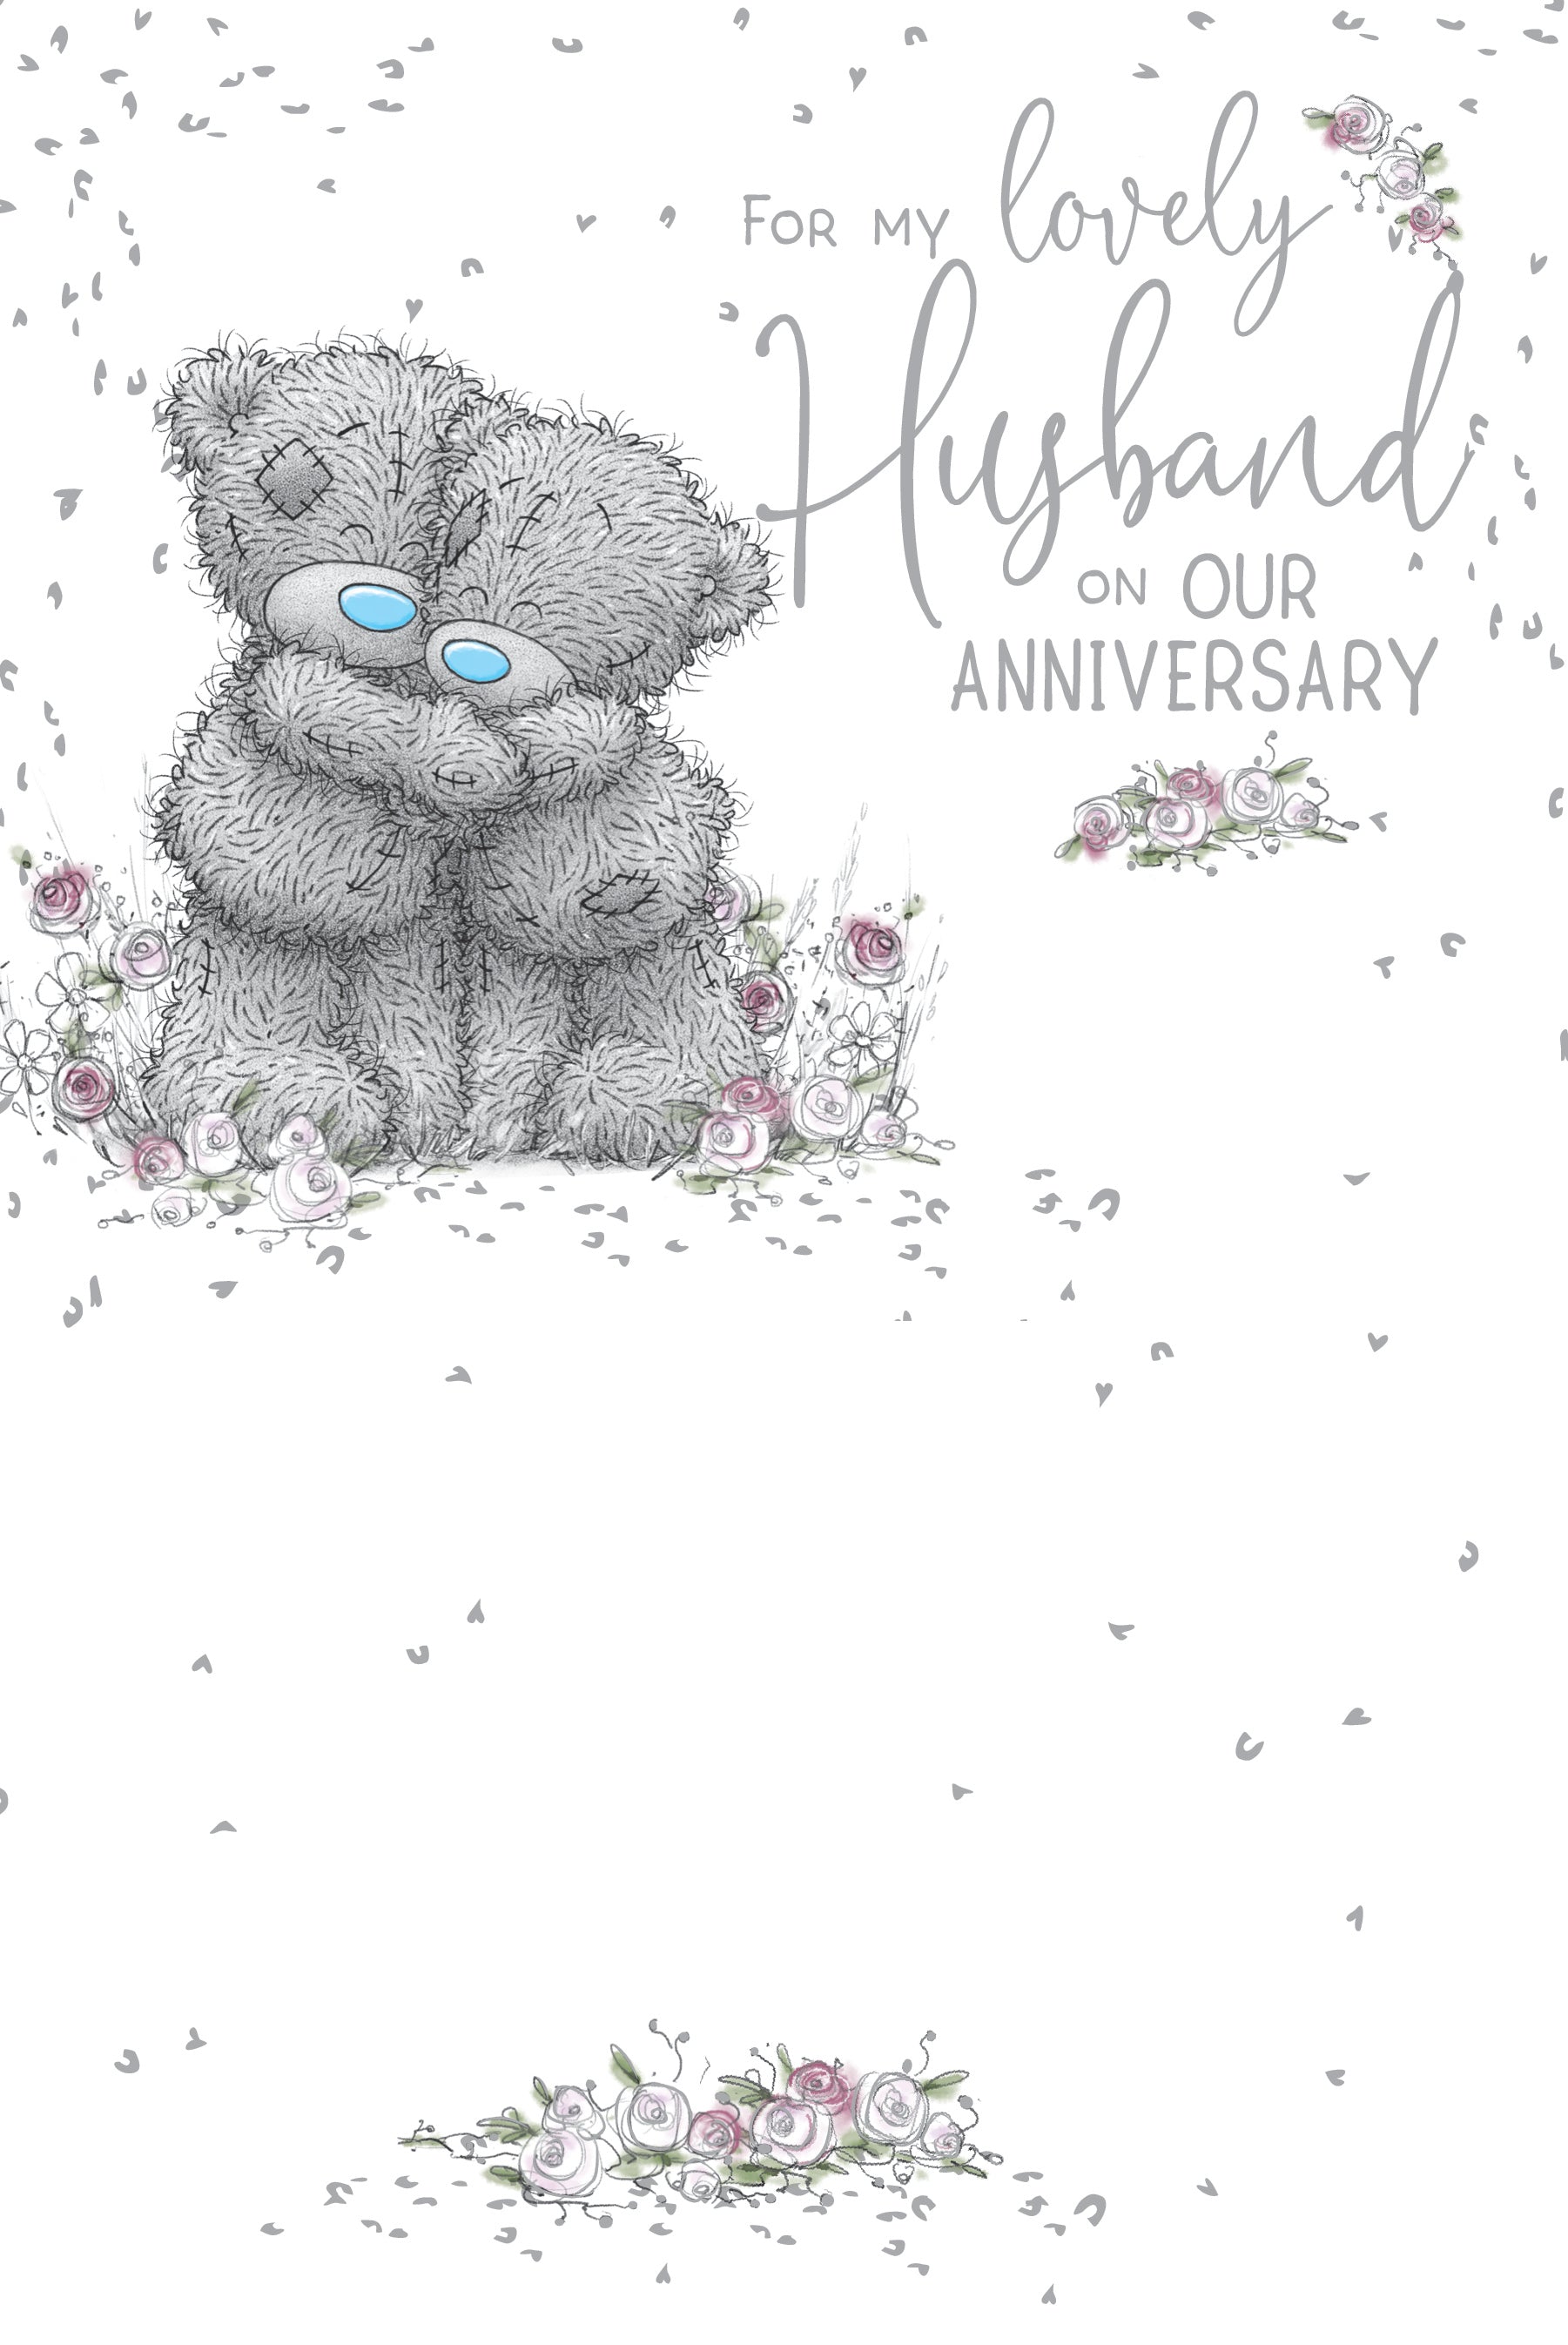 Husband Anniversary Card - Bears Hugging